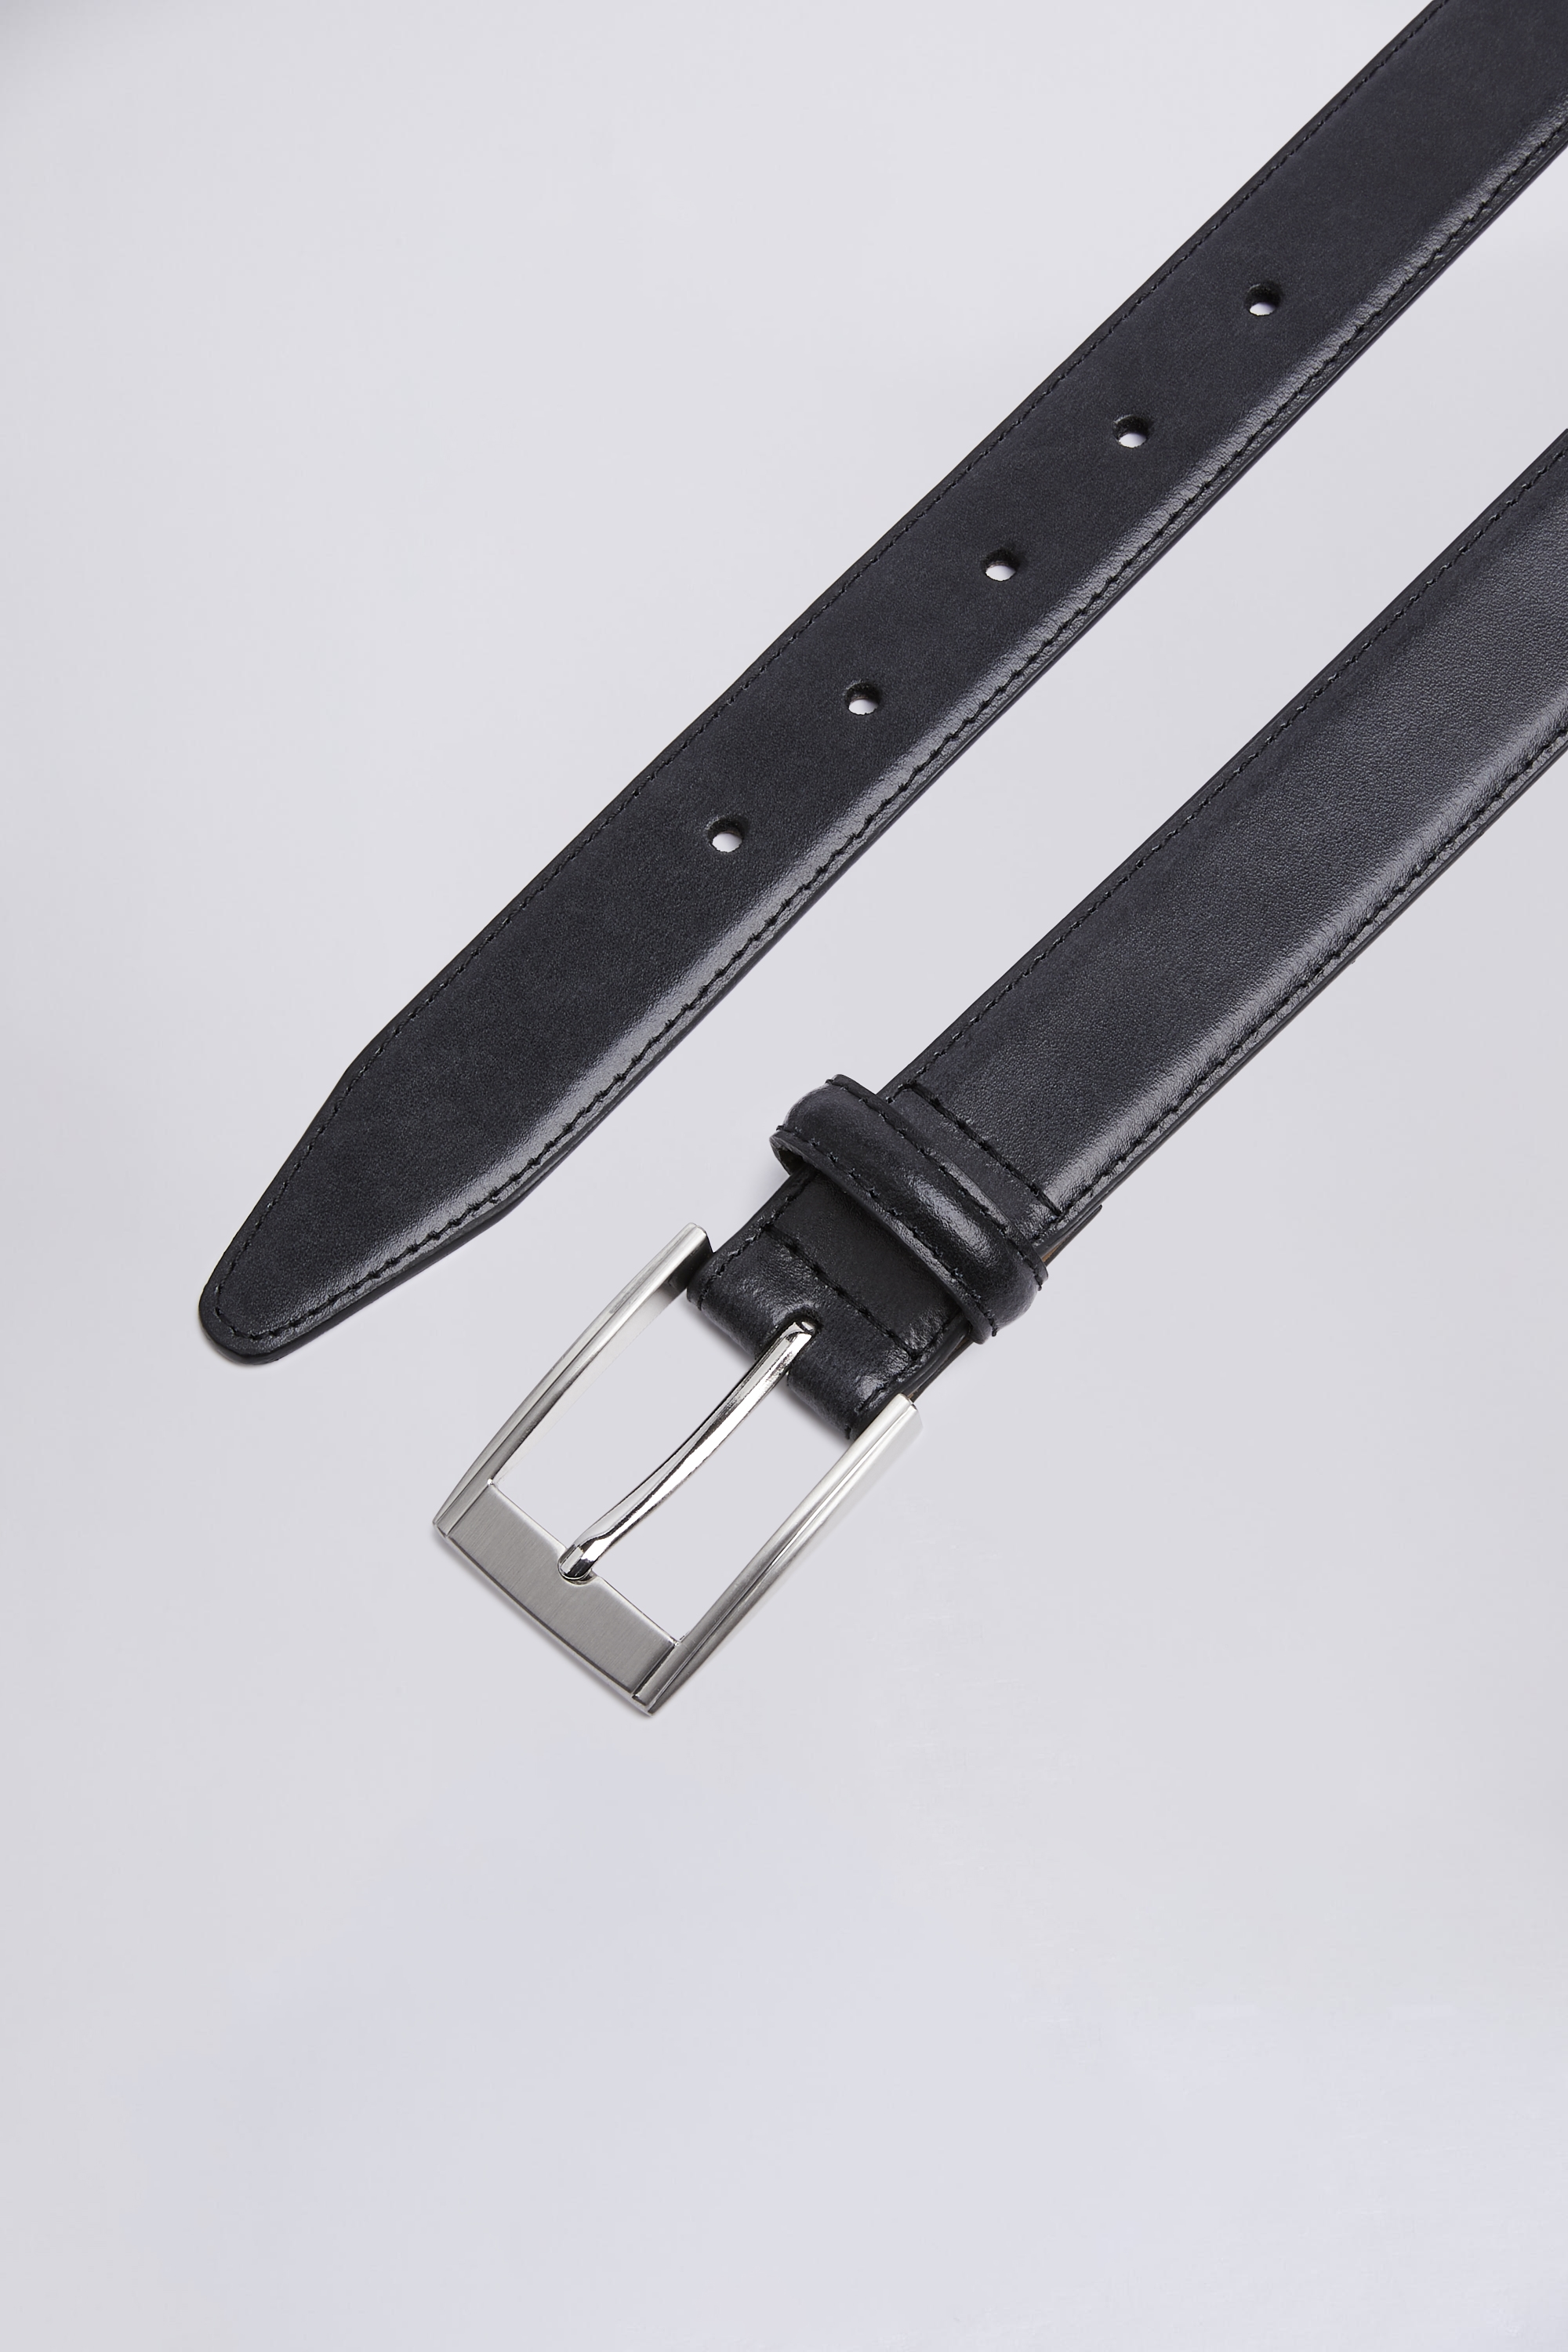 Black Leather Belt | Buy Online at Moss